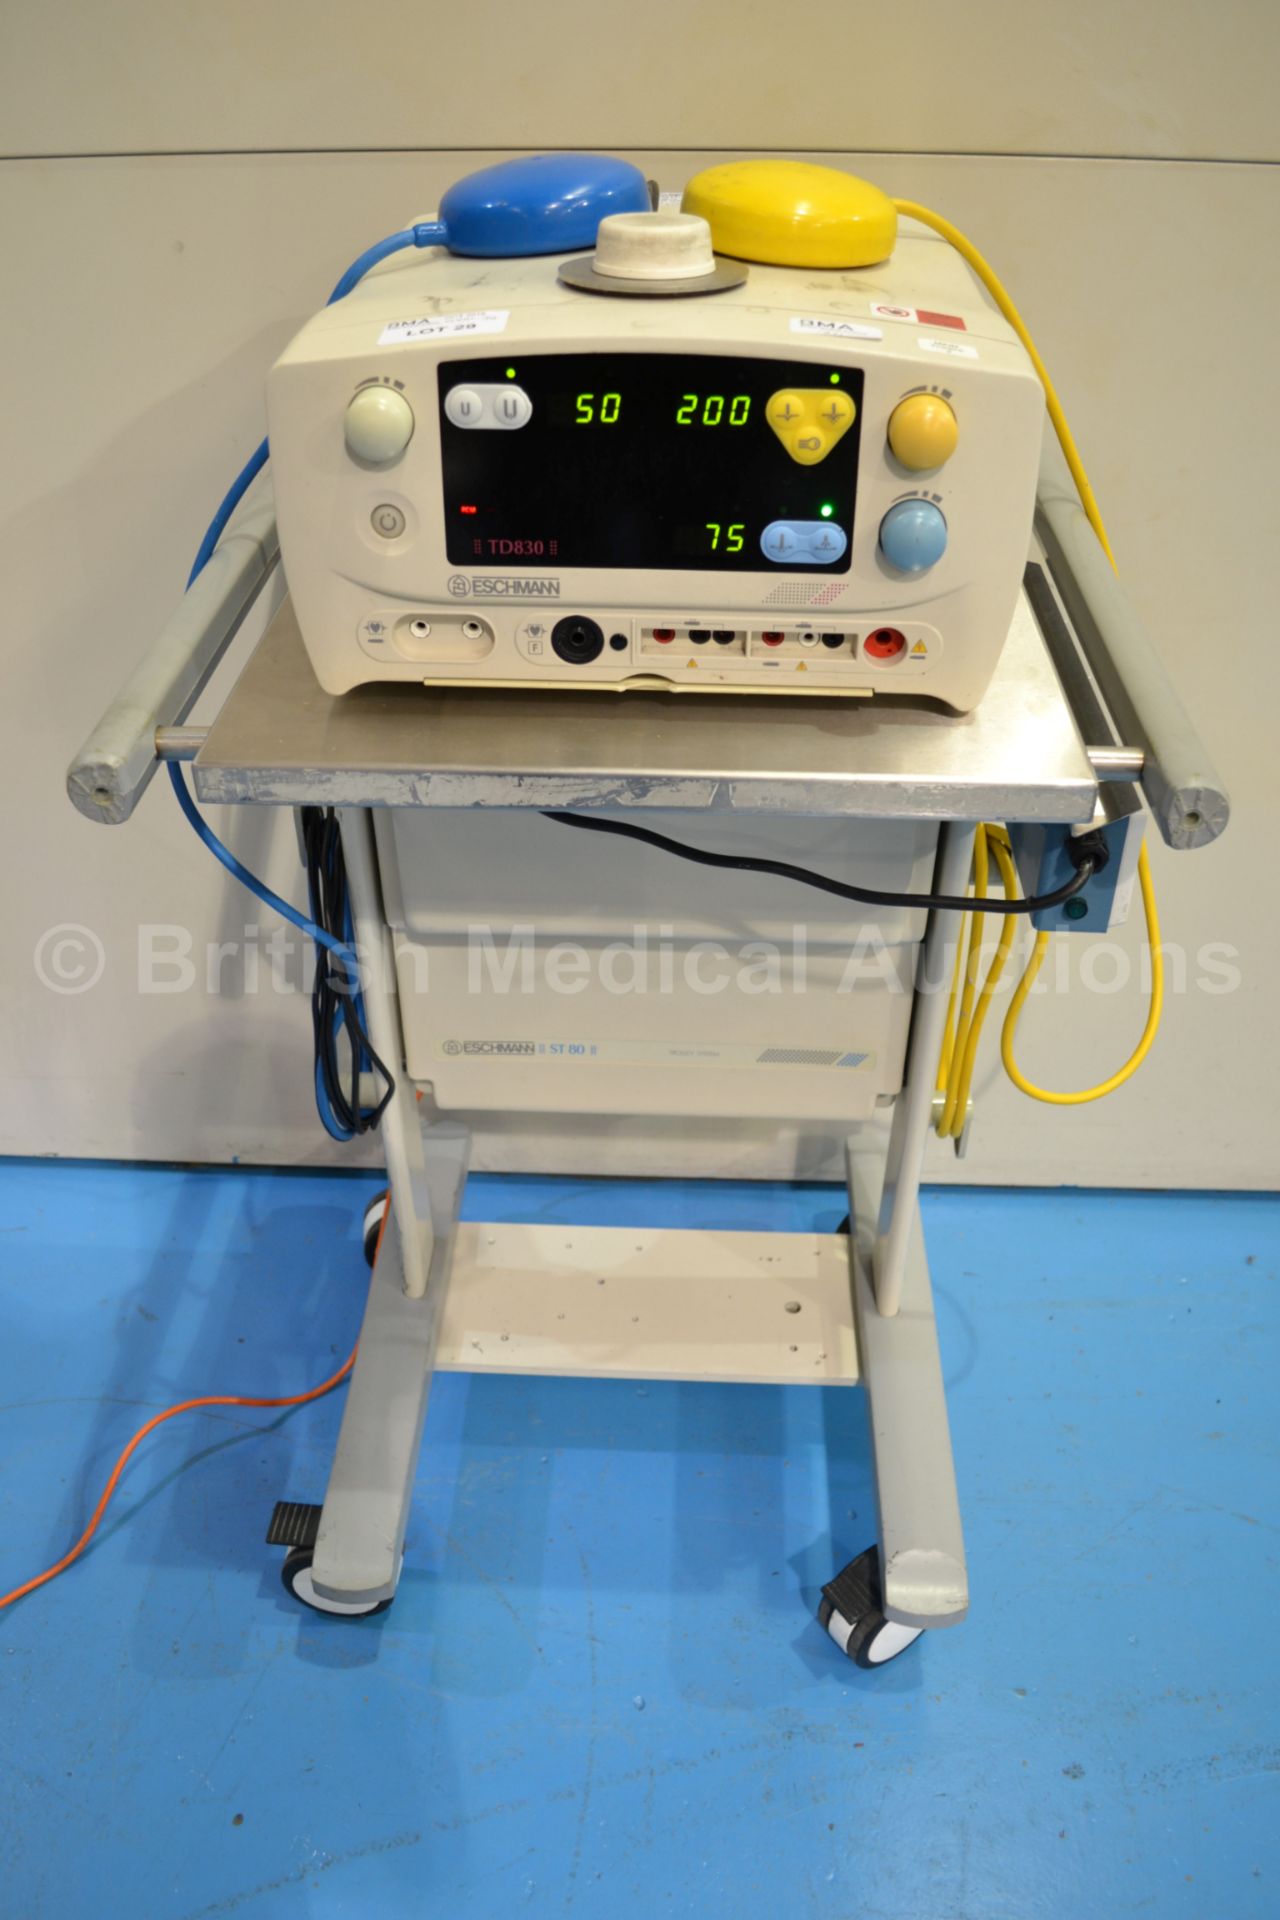 Eschmann TD830 Electrosurgical Diathermy System on